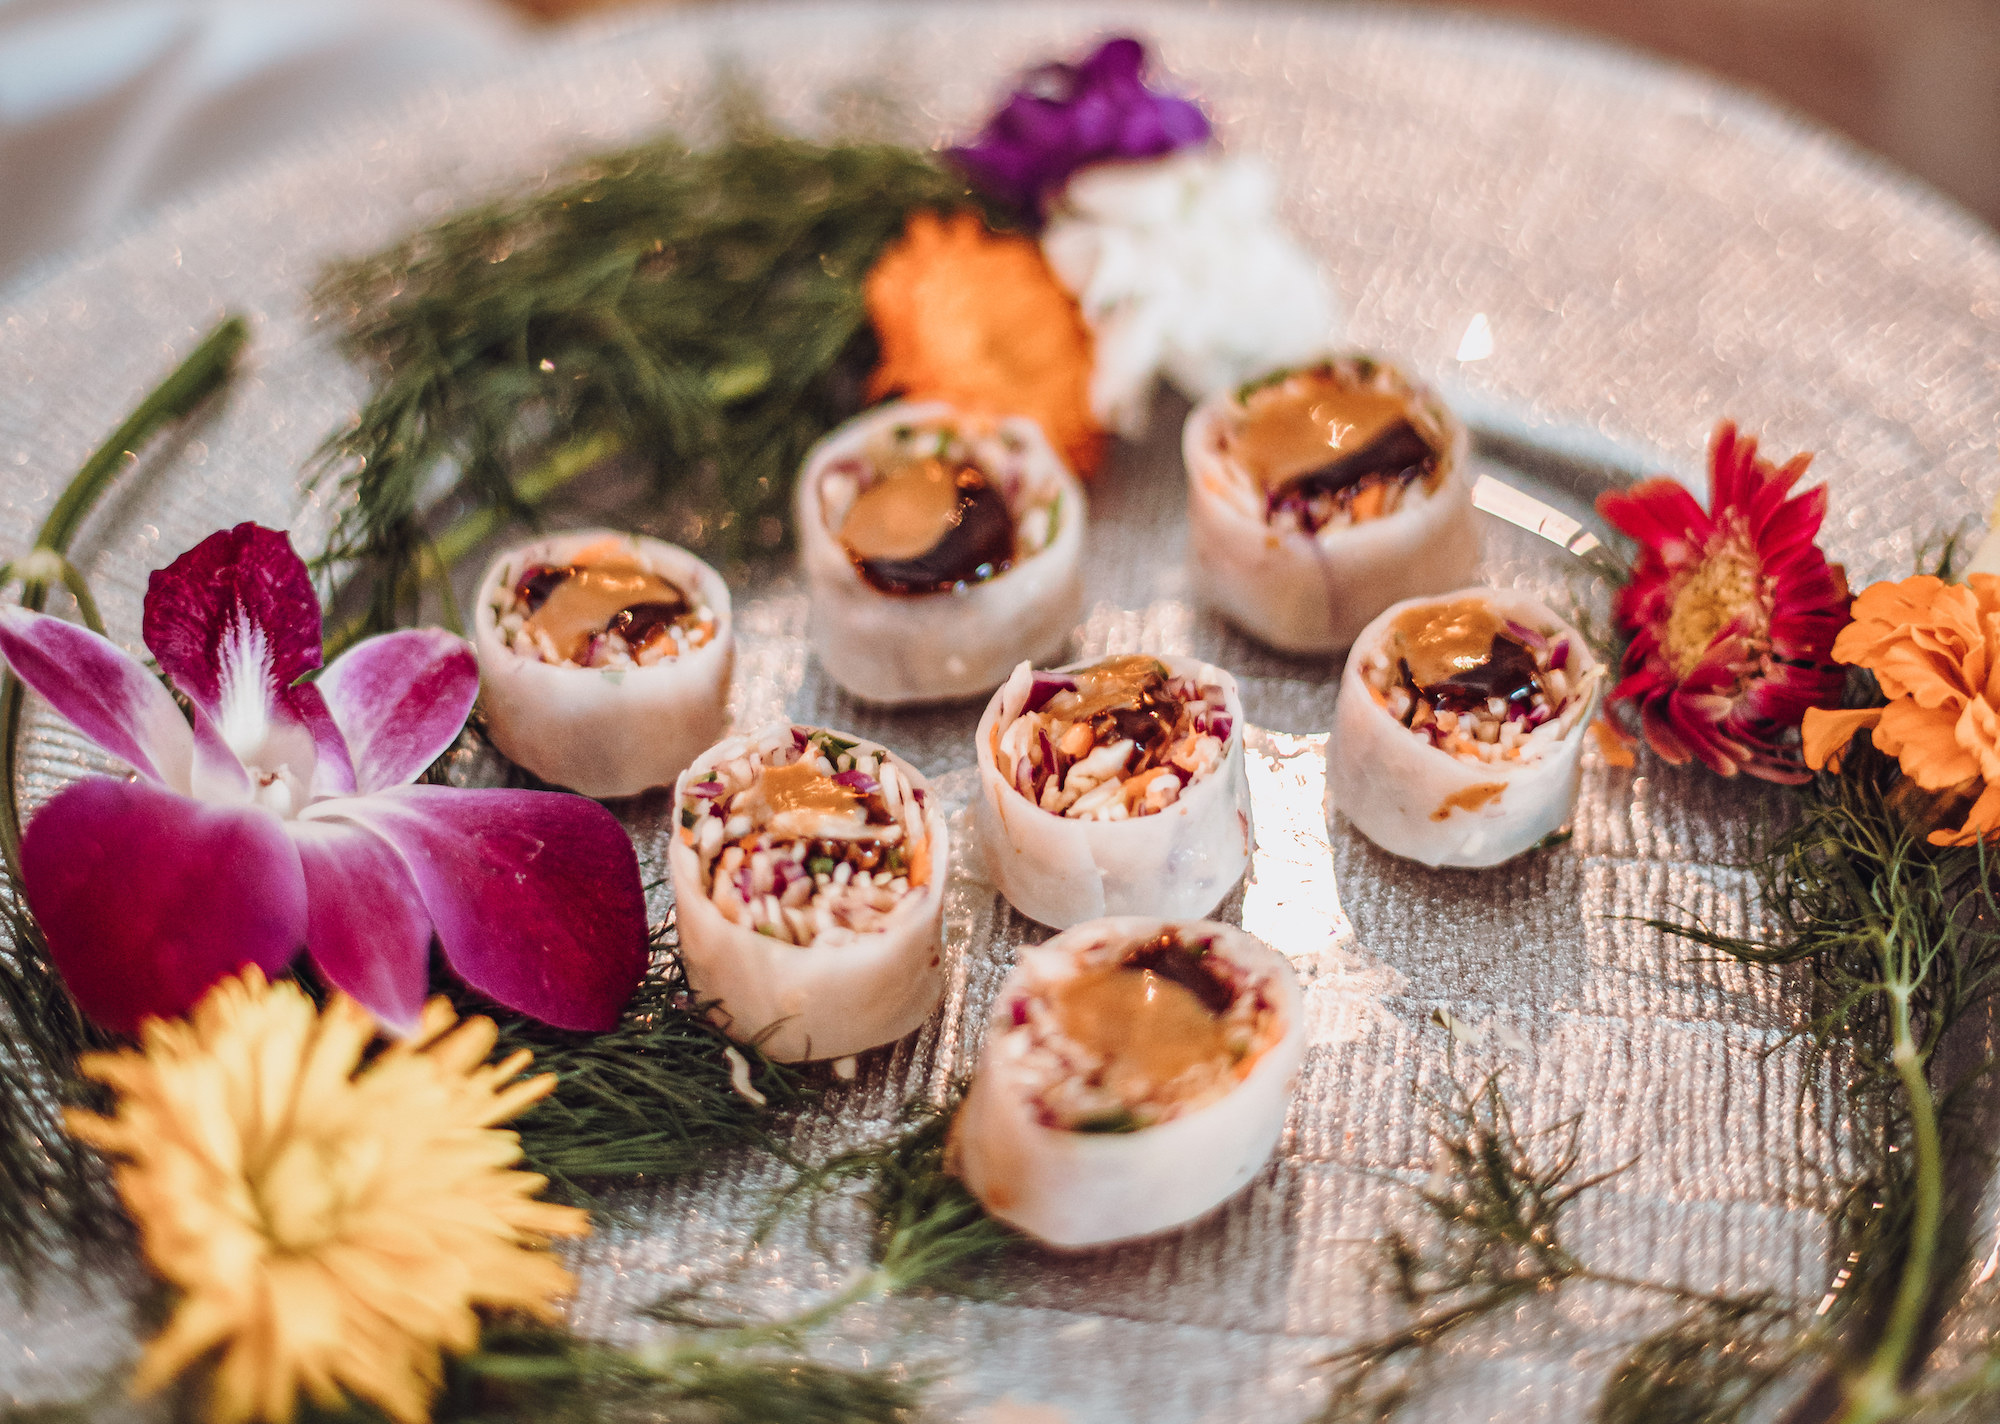 Miso vegetable spring roll wedding appetizer garnished with fresh botanicals, a 2021 wedding trend.